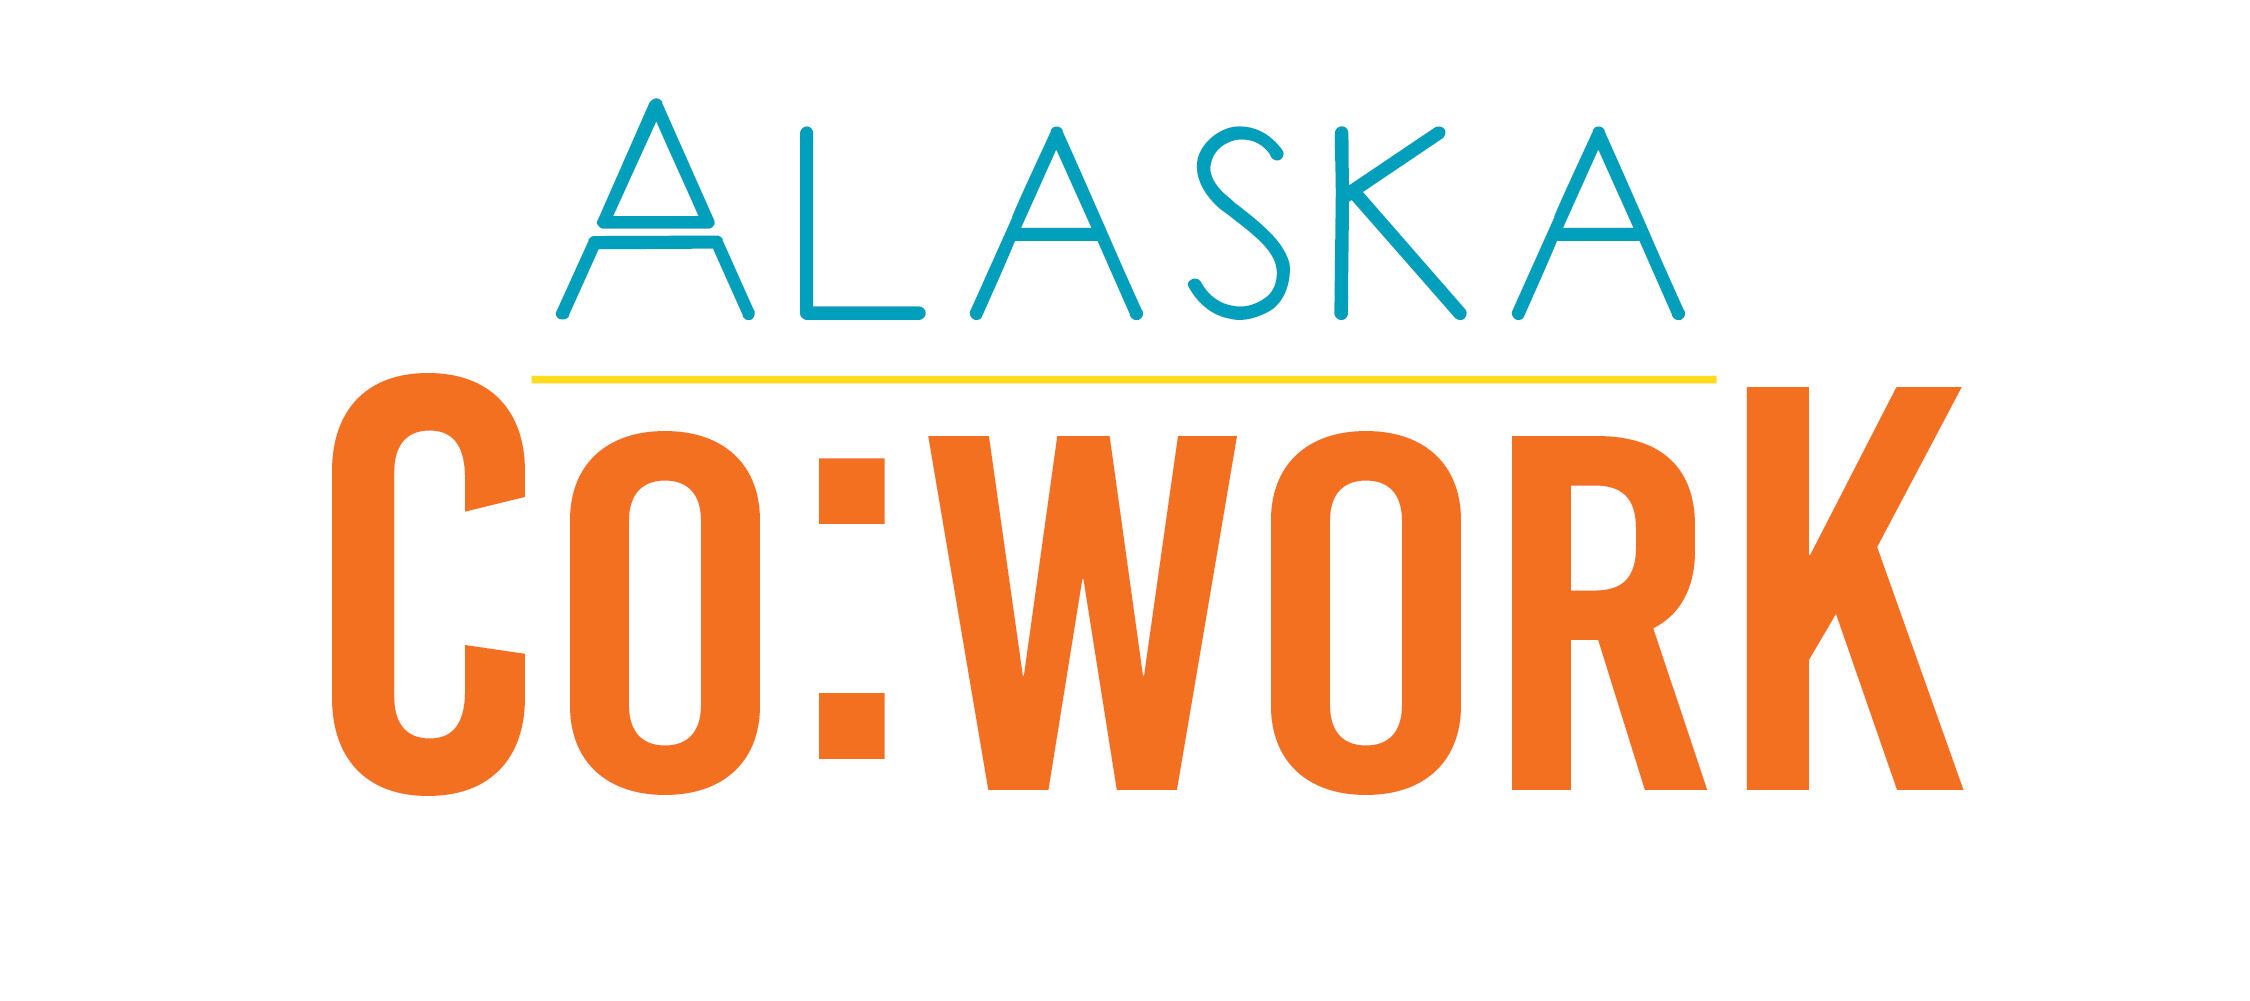 Alaska Co:Work